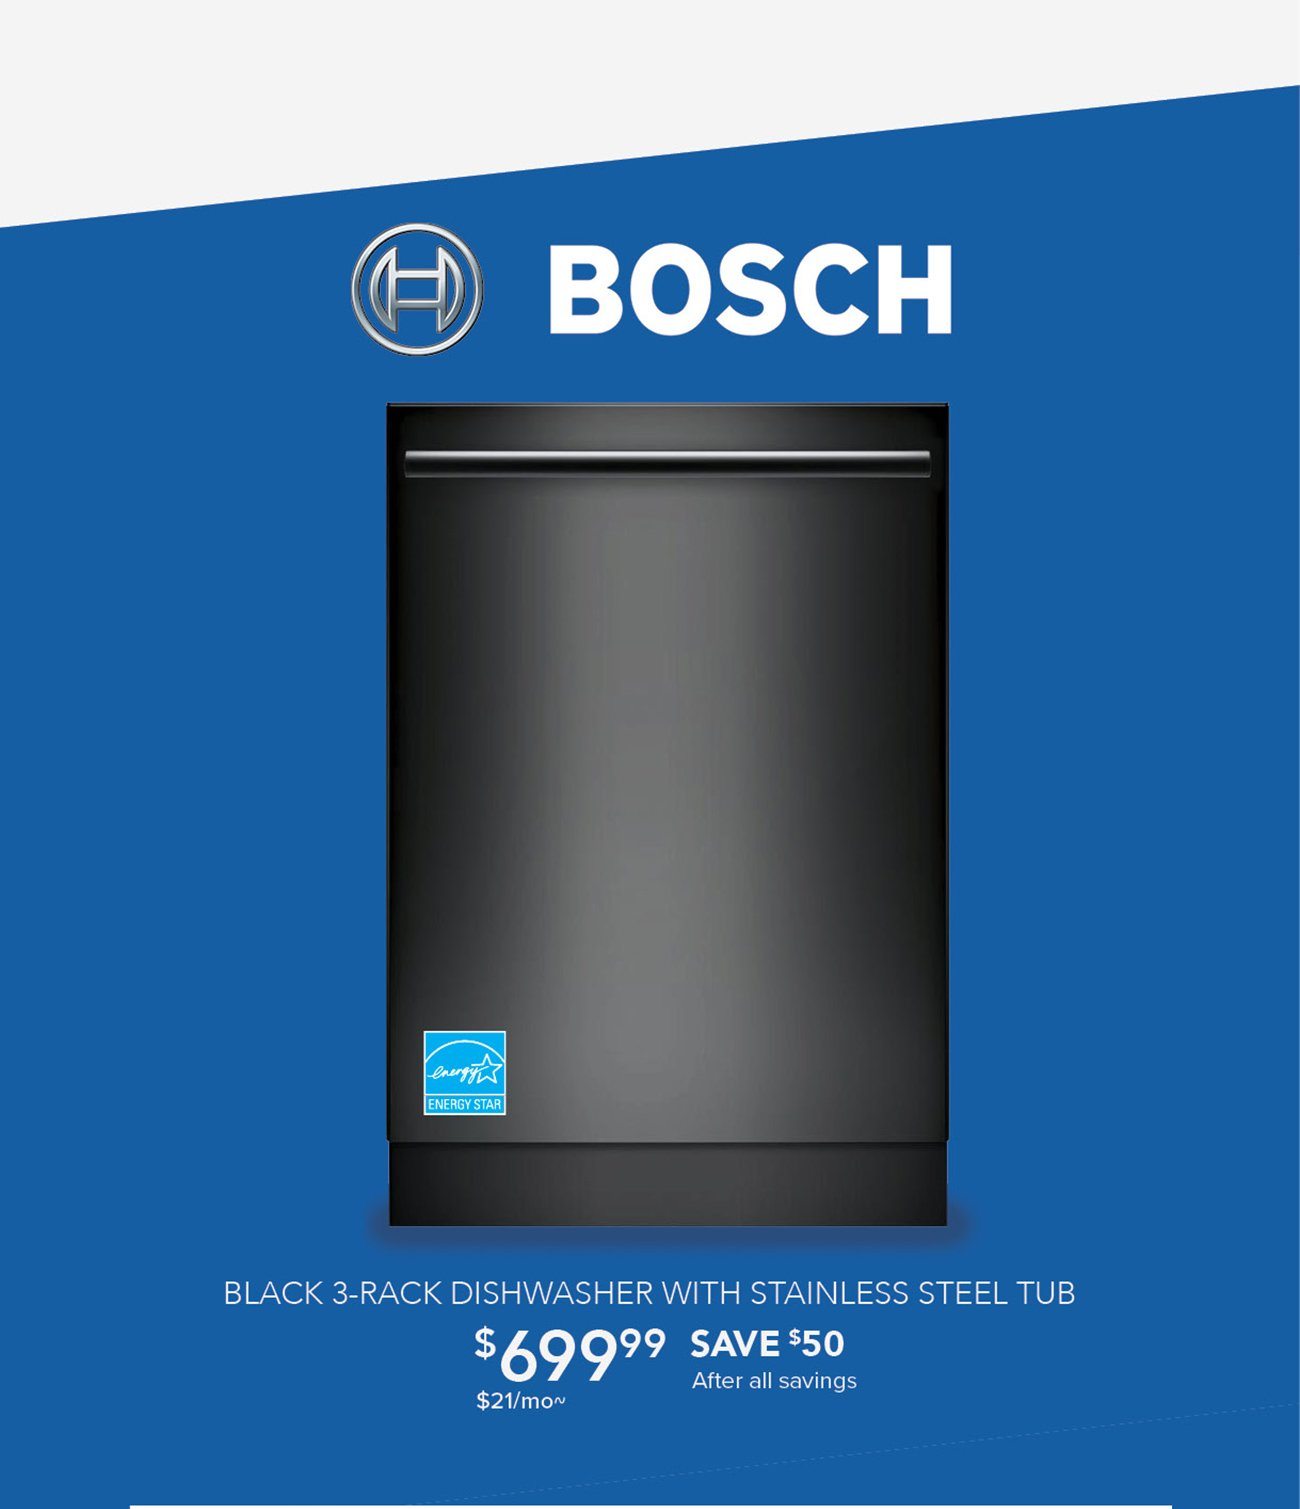 Bosch-dishwasher